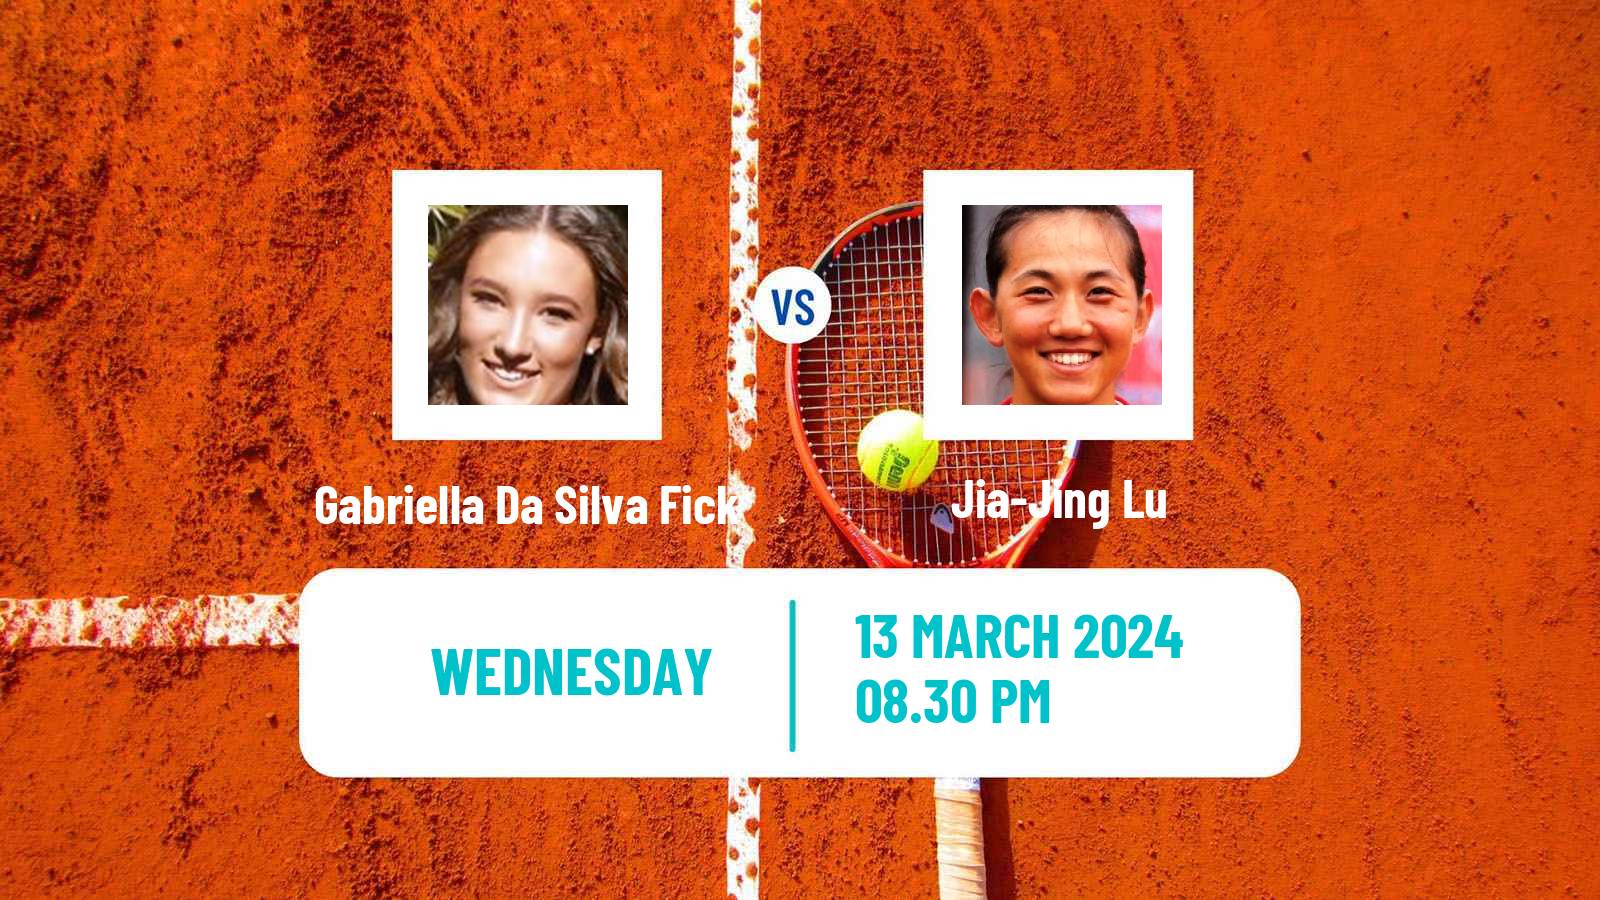 Tennis ITF W35 Mildura Women Gabriella Da Silva Fick - Jia-Jing Lu